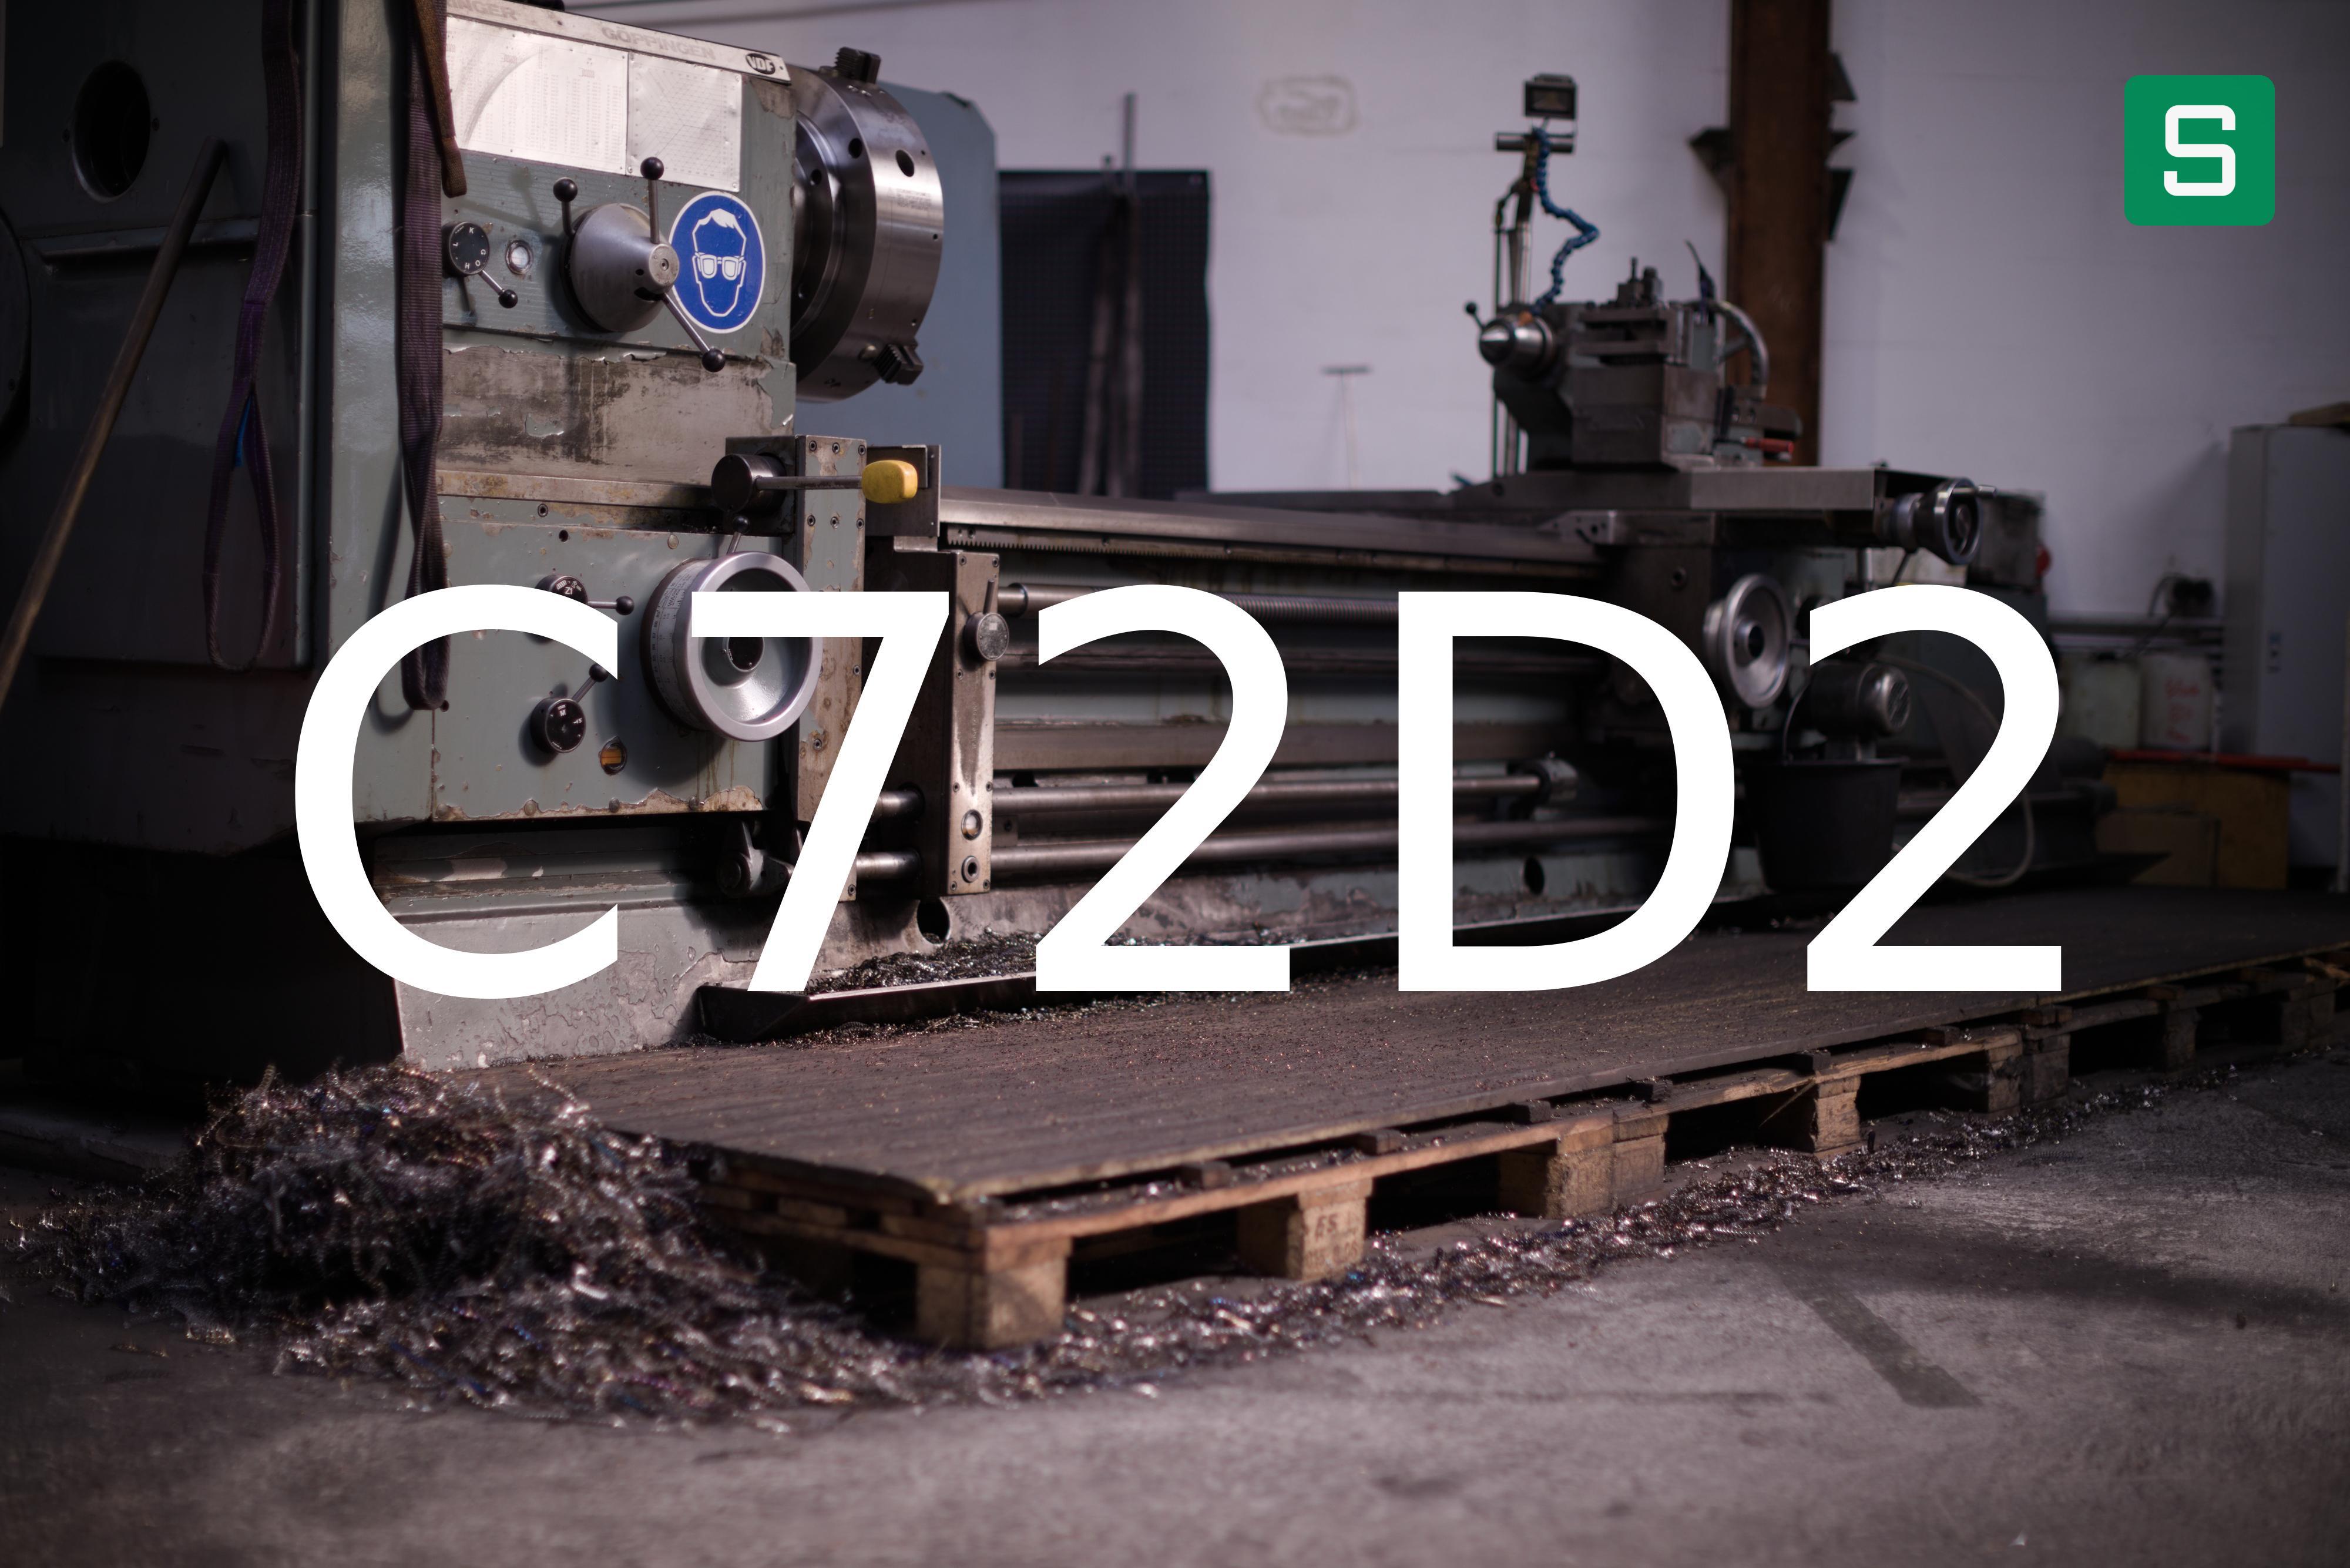 Steel Material: C72D2